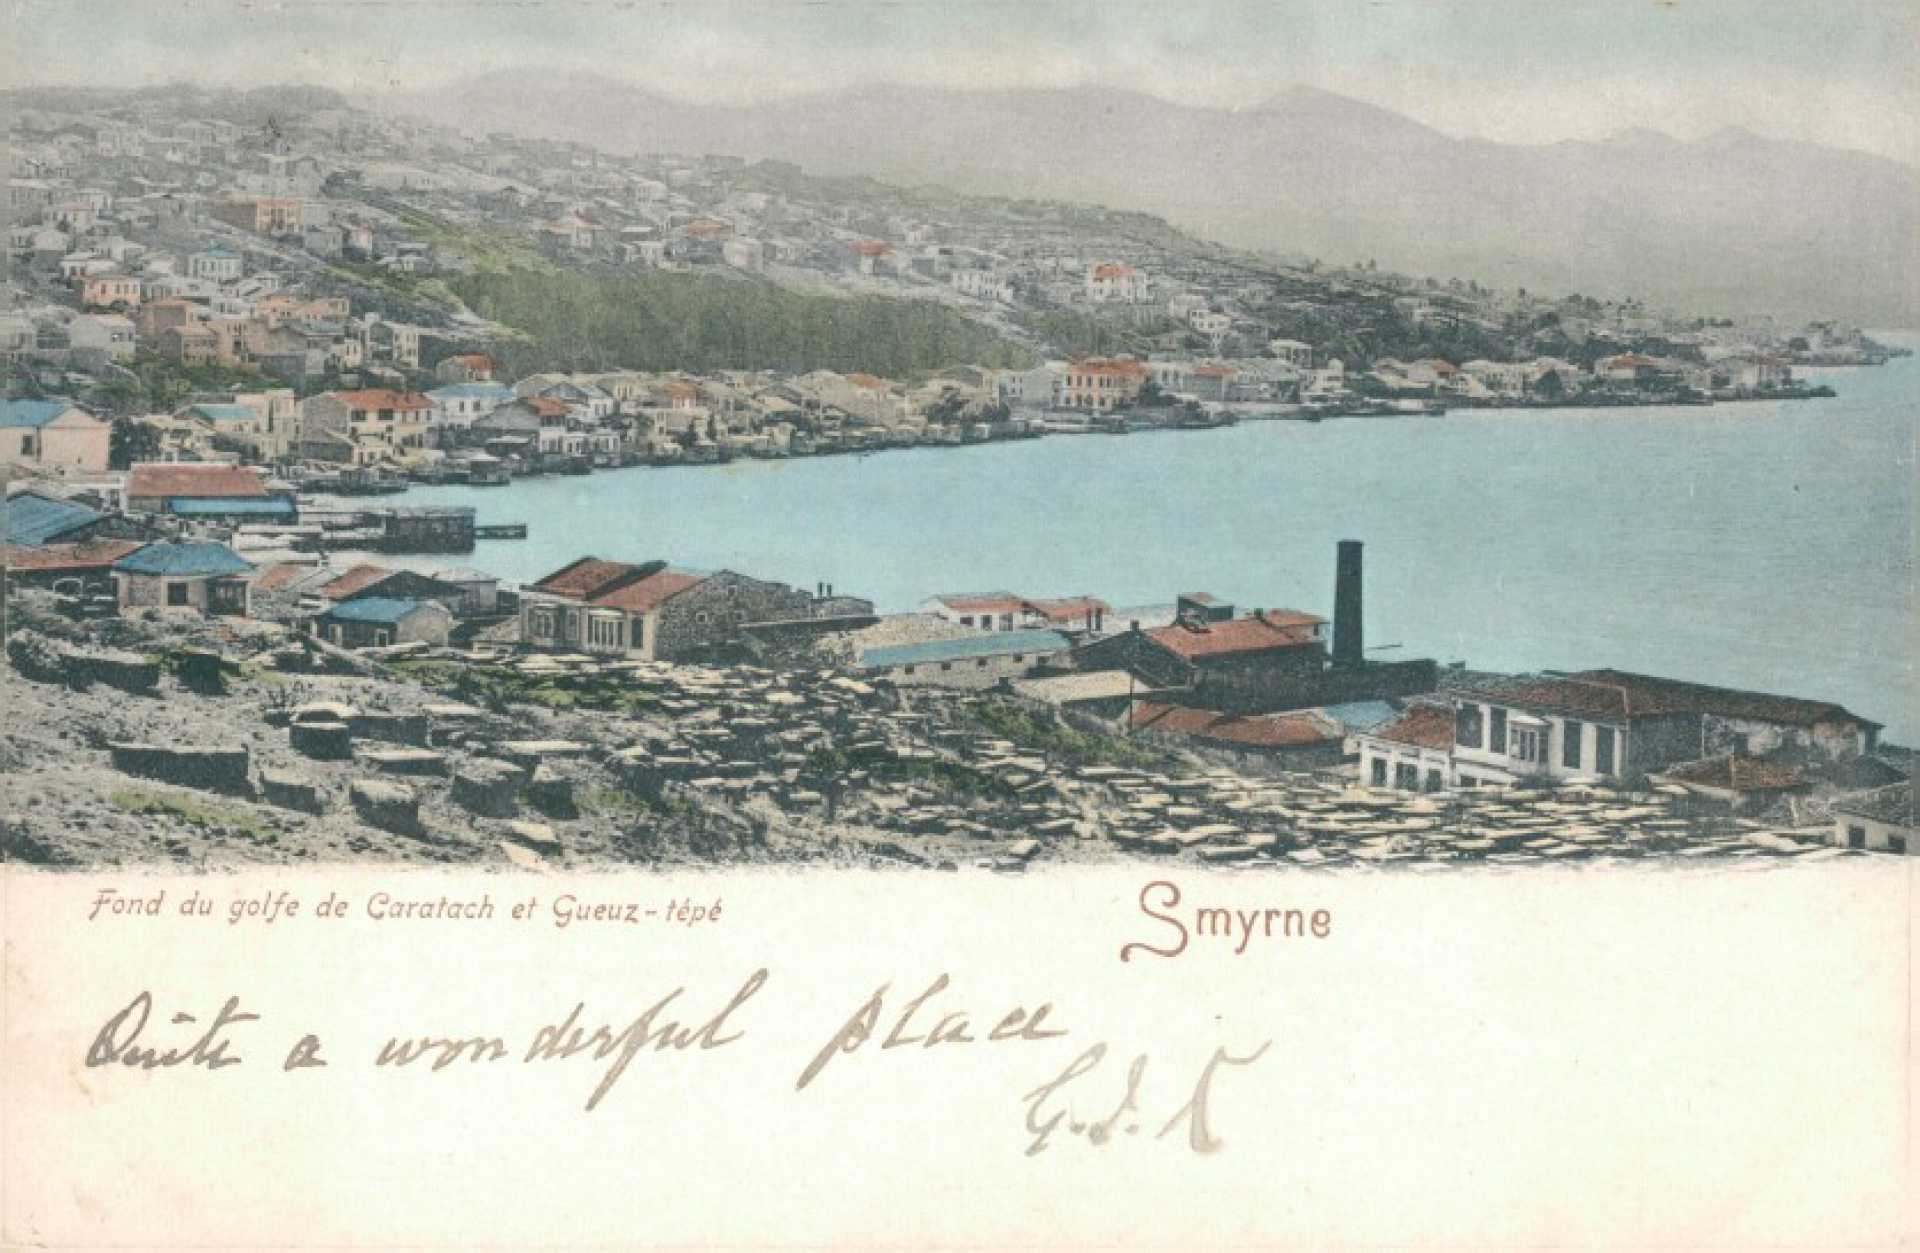 Smyrne (Izmir)